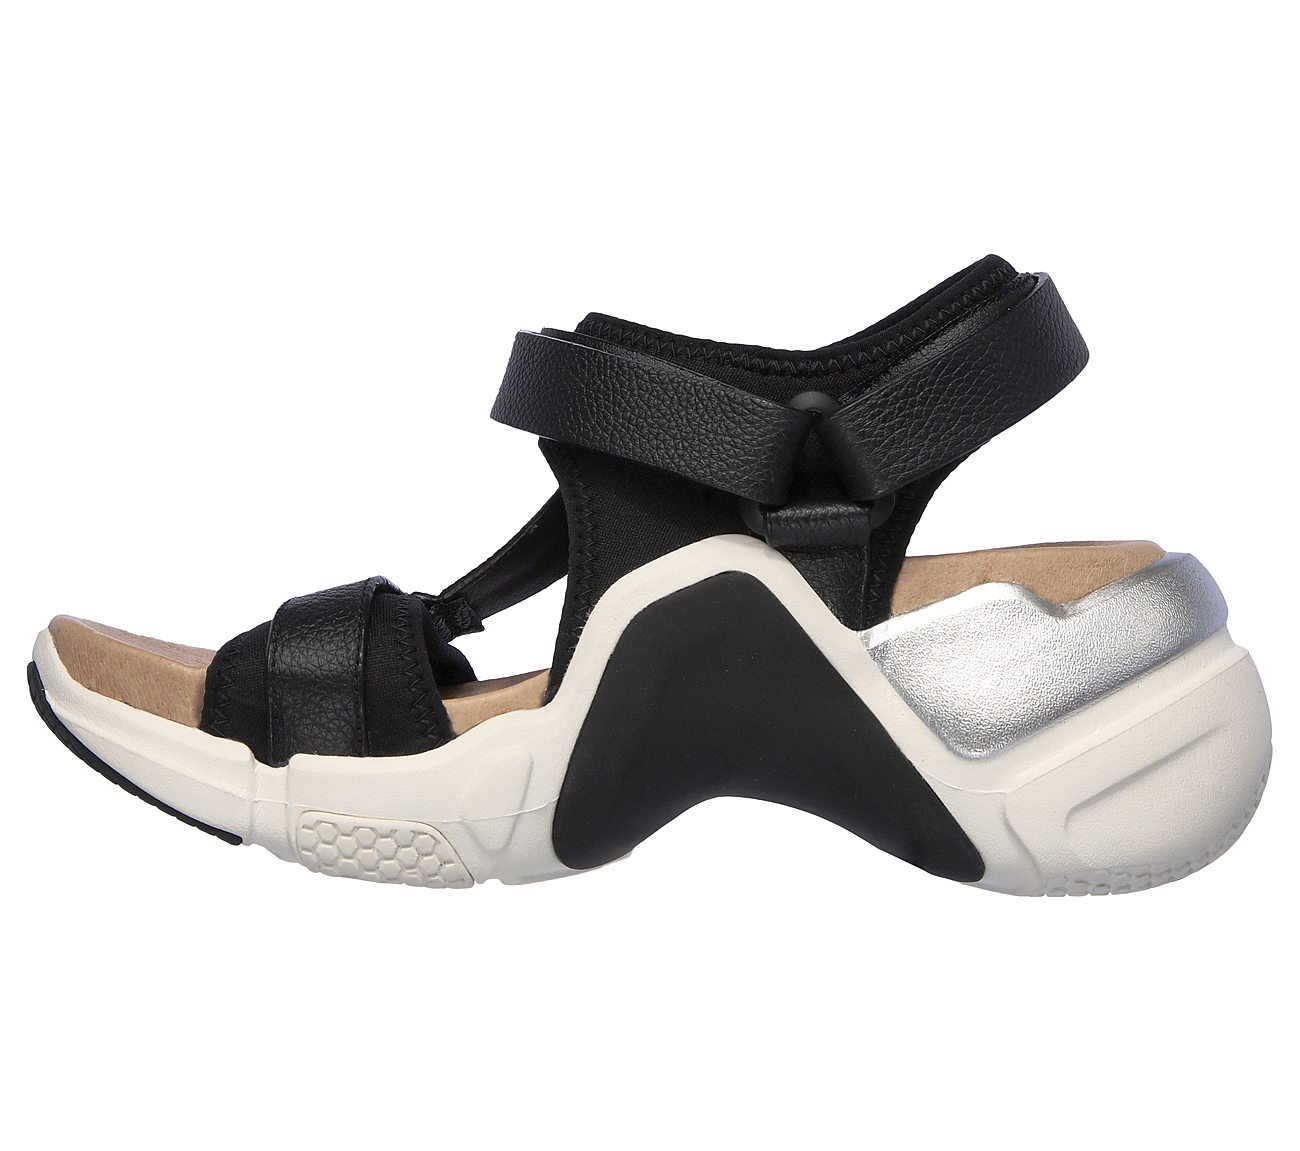 NEO BLOCK - DIDI, BLACK/WHITE Footwear Left View